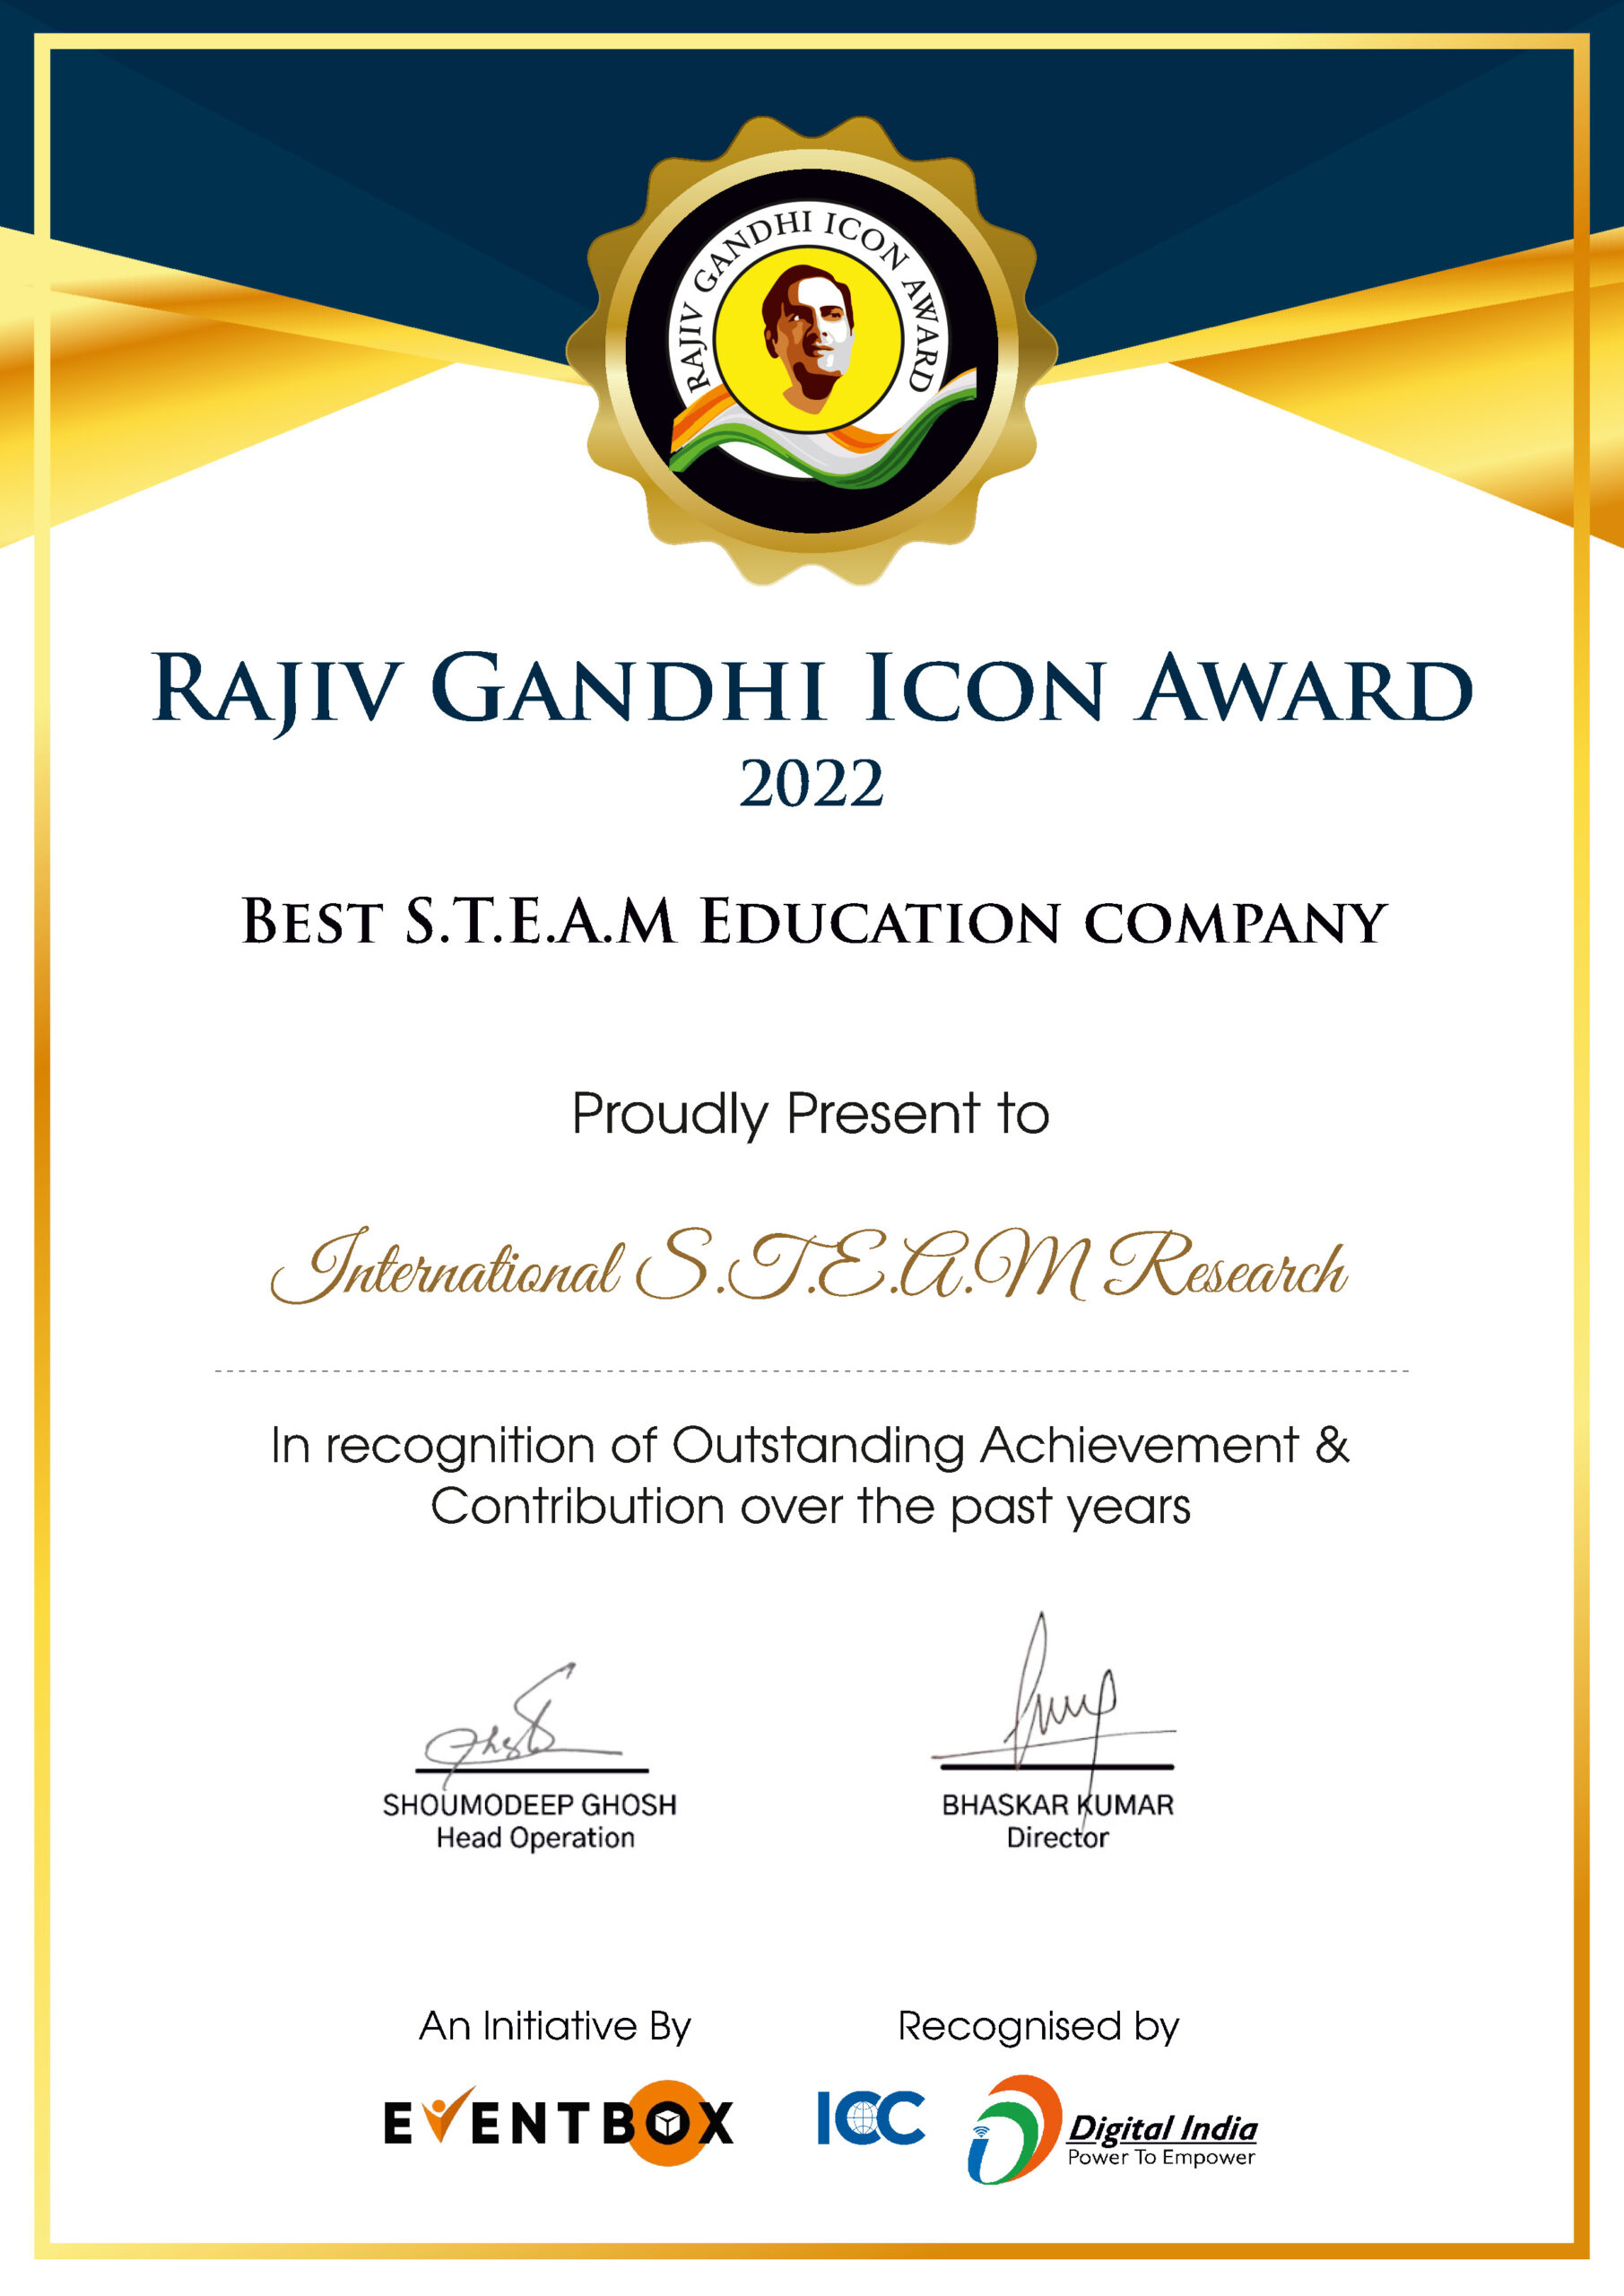 Rajiv Gandhi Icon Award